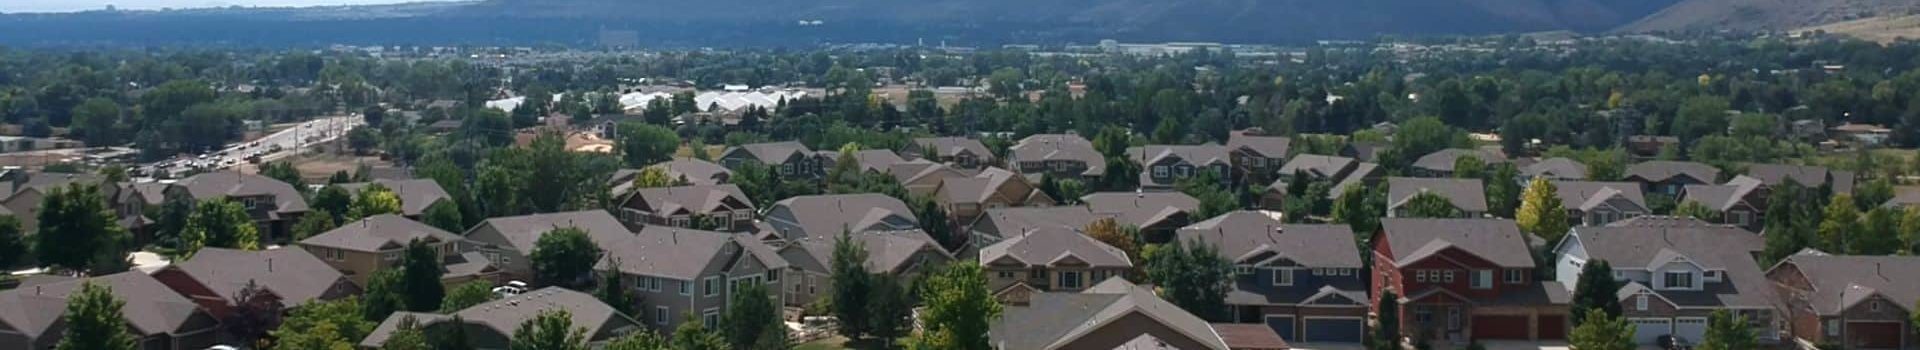 aerial photo of neighborhood in golden, colorado